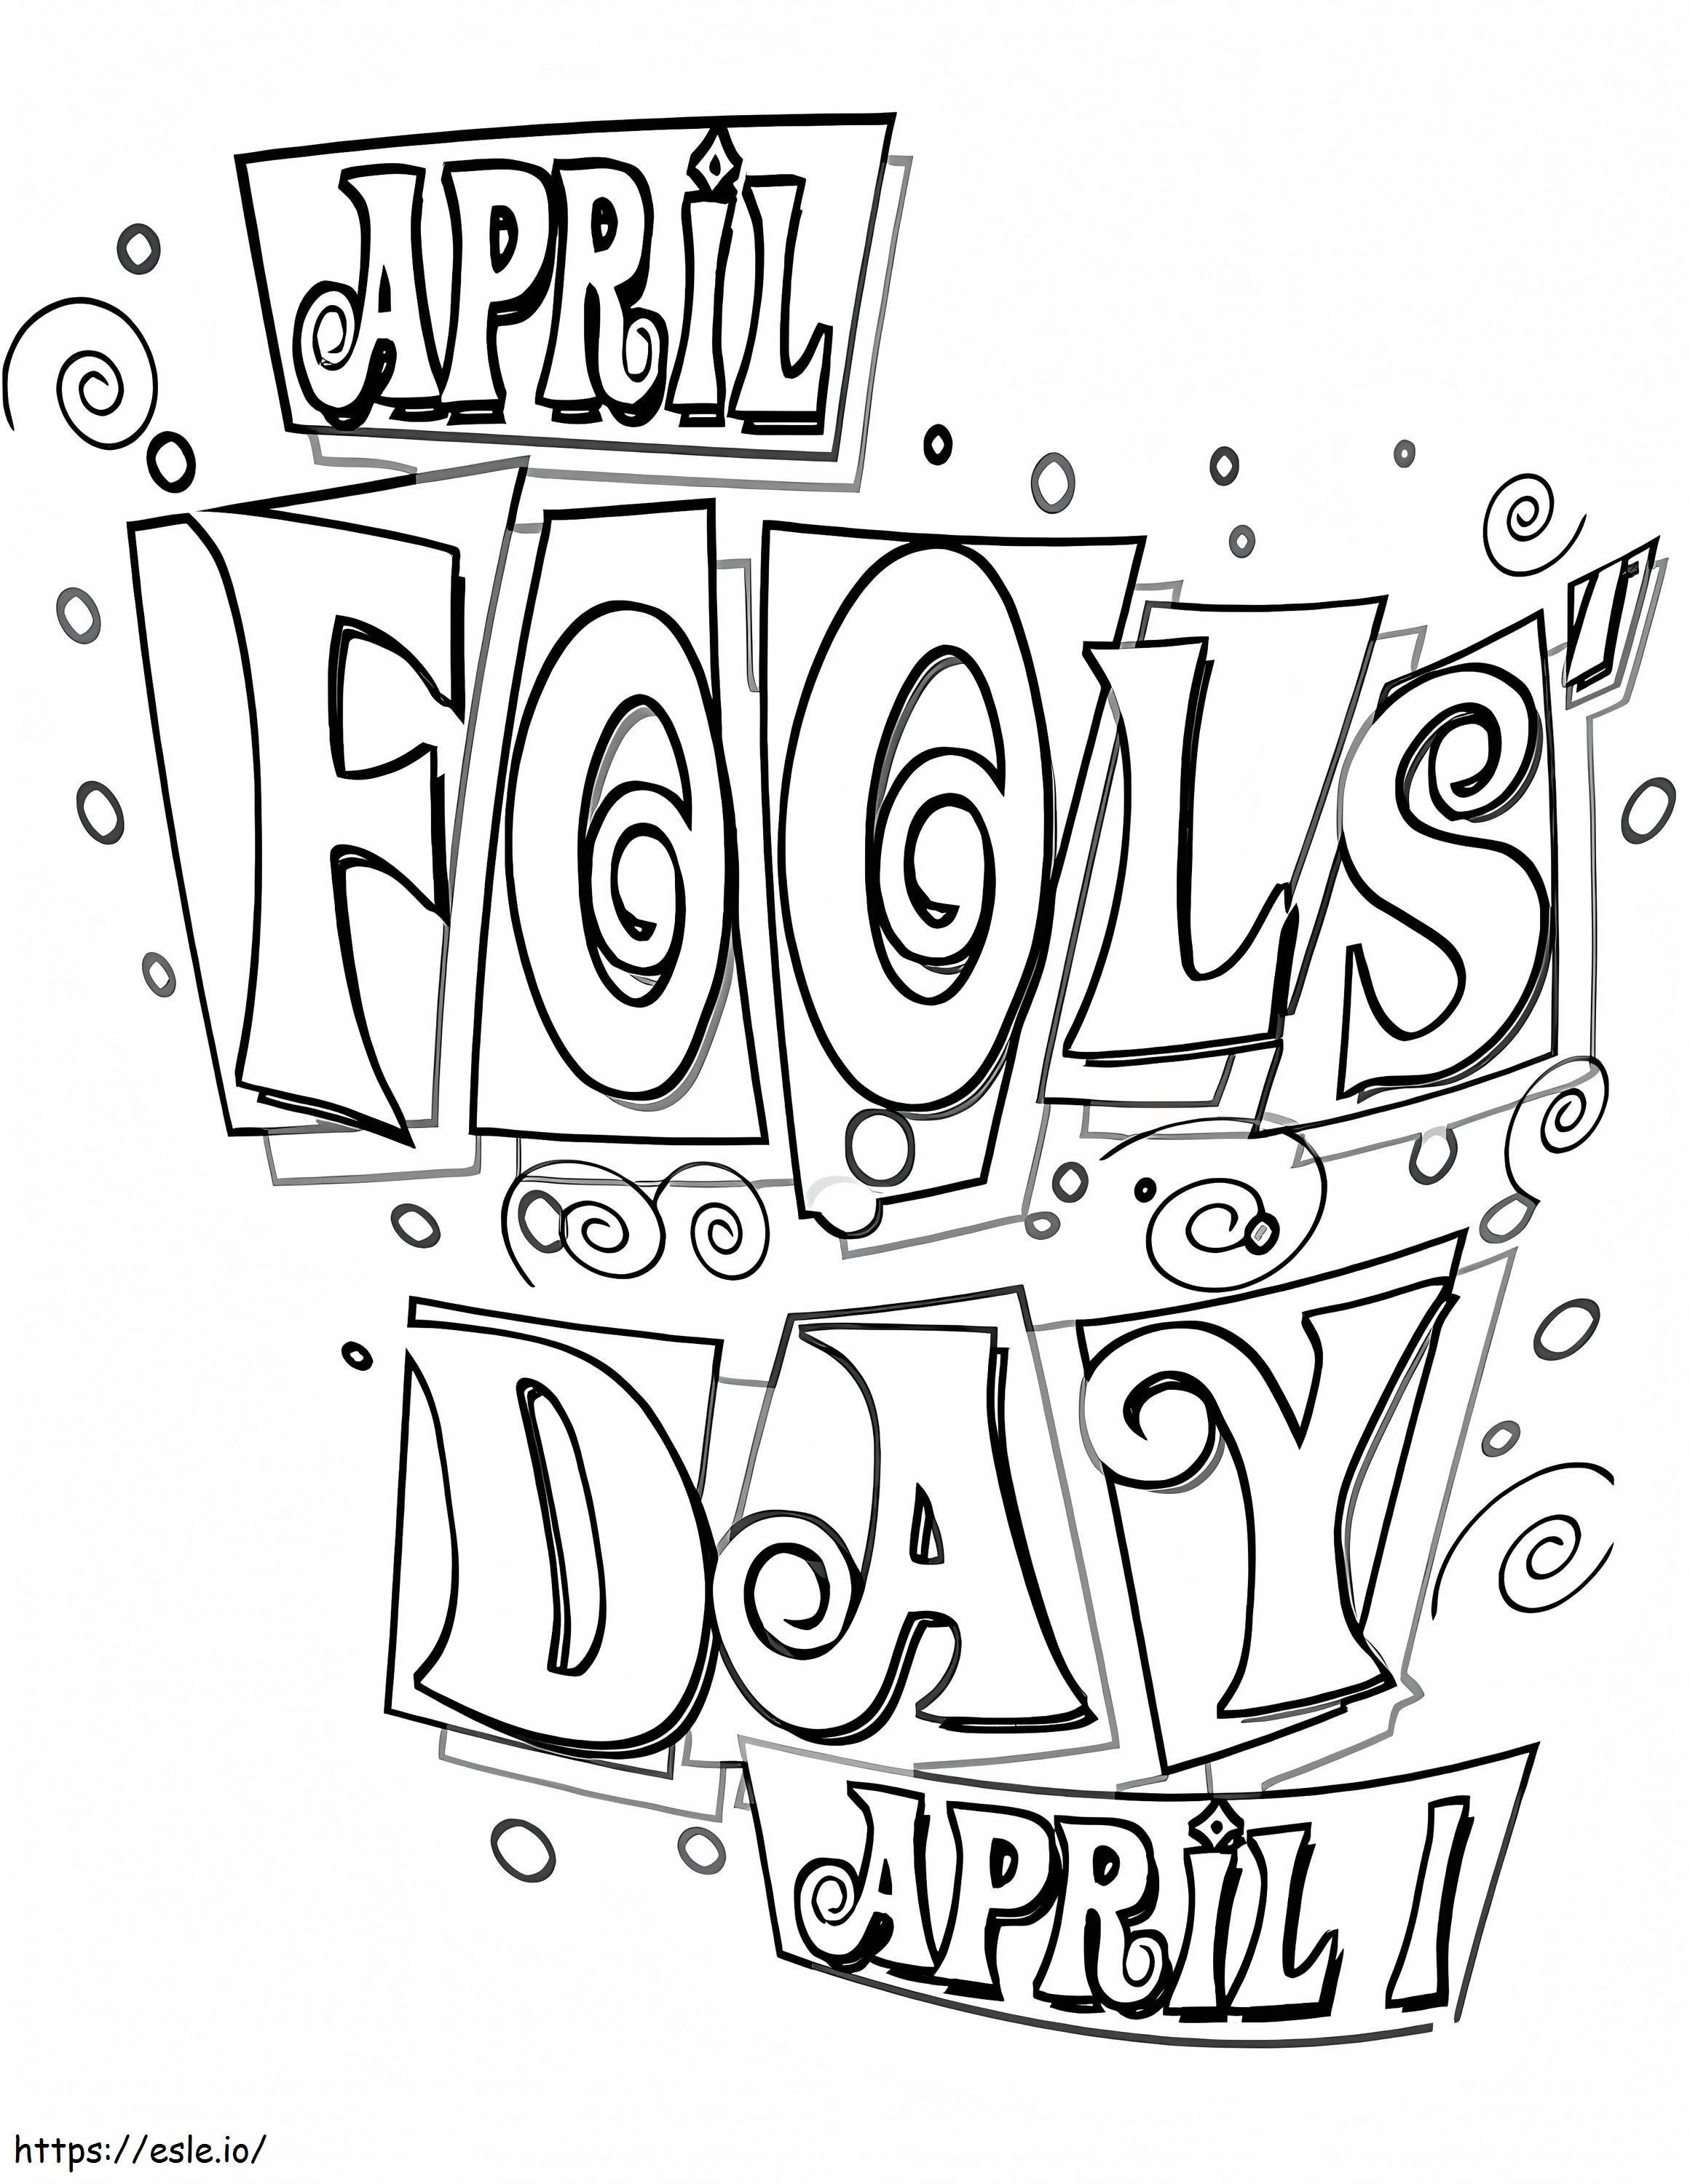 Happy April Fools Day 6 coloring page